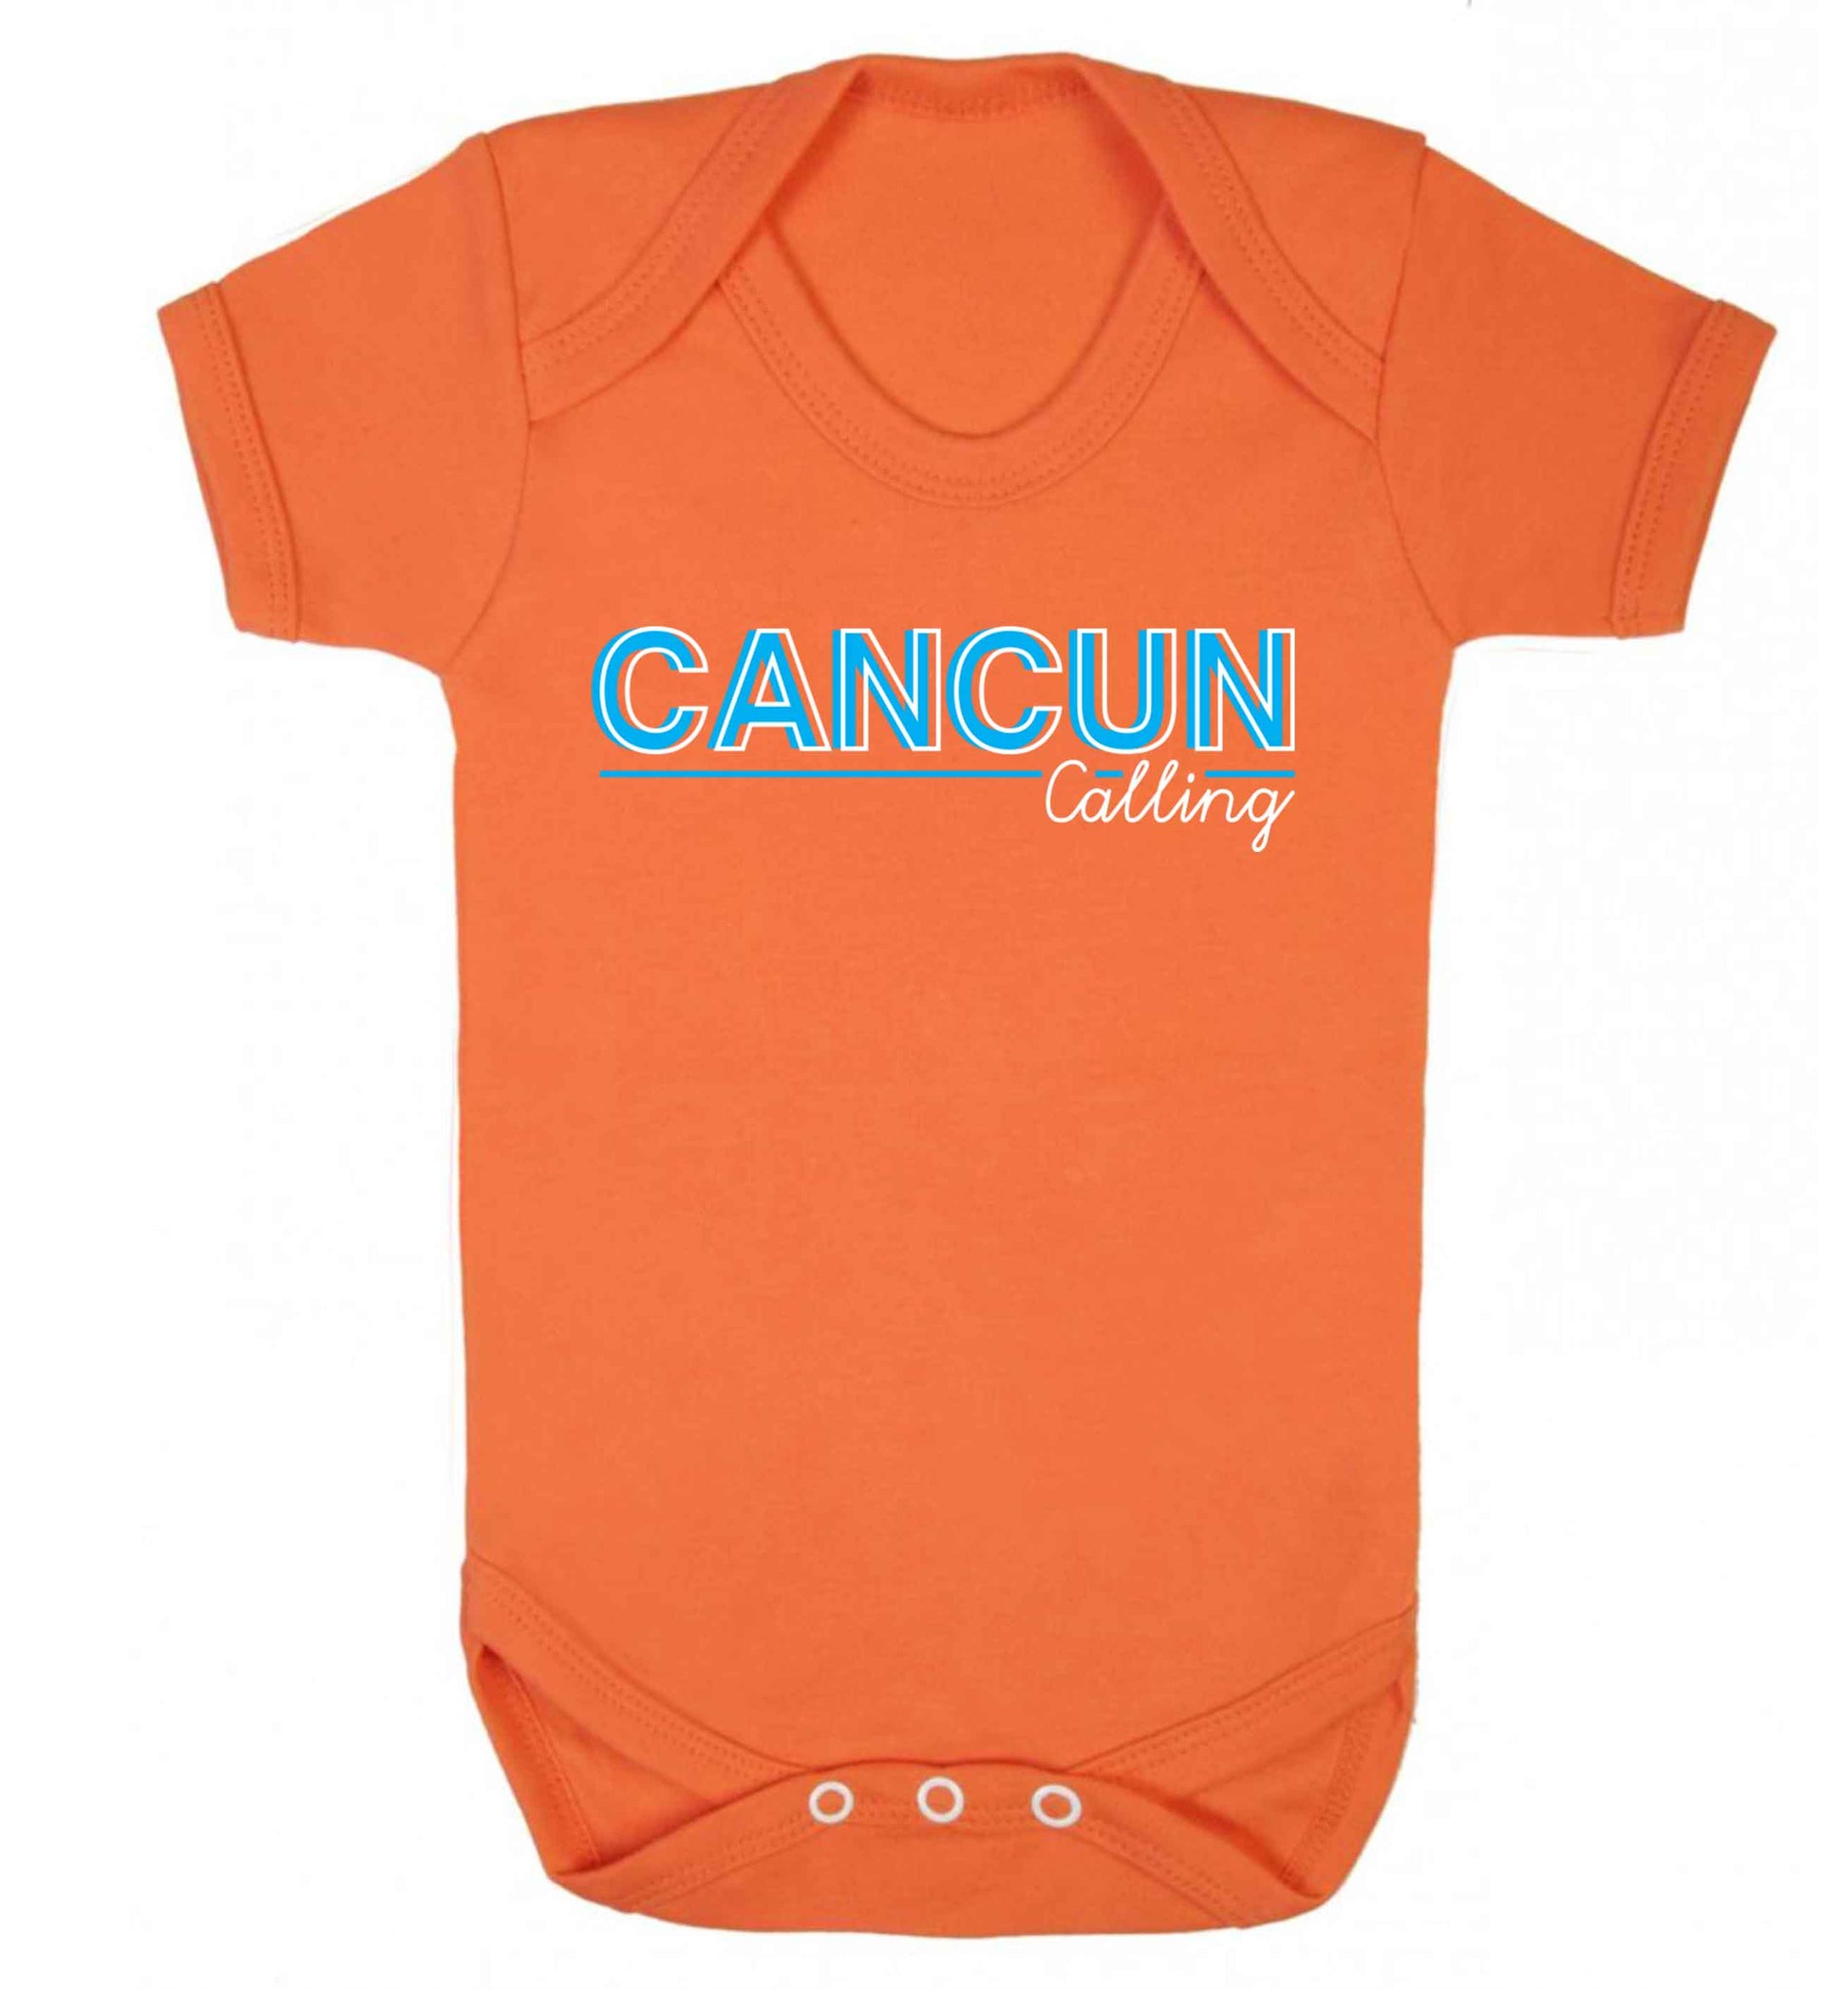 Cancun calling Baby Vest orange 18-24 months